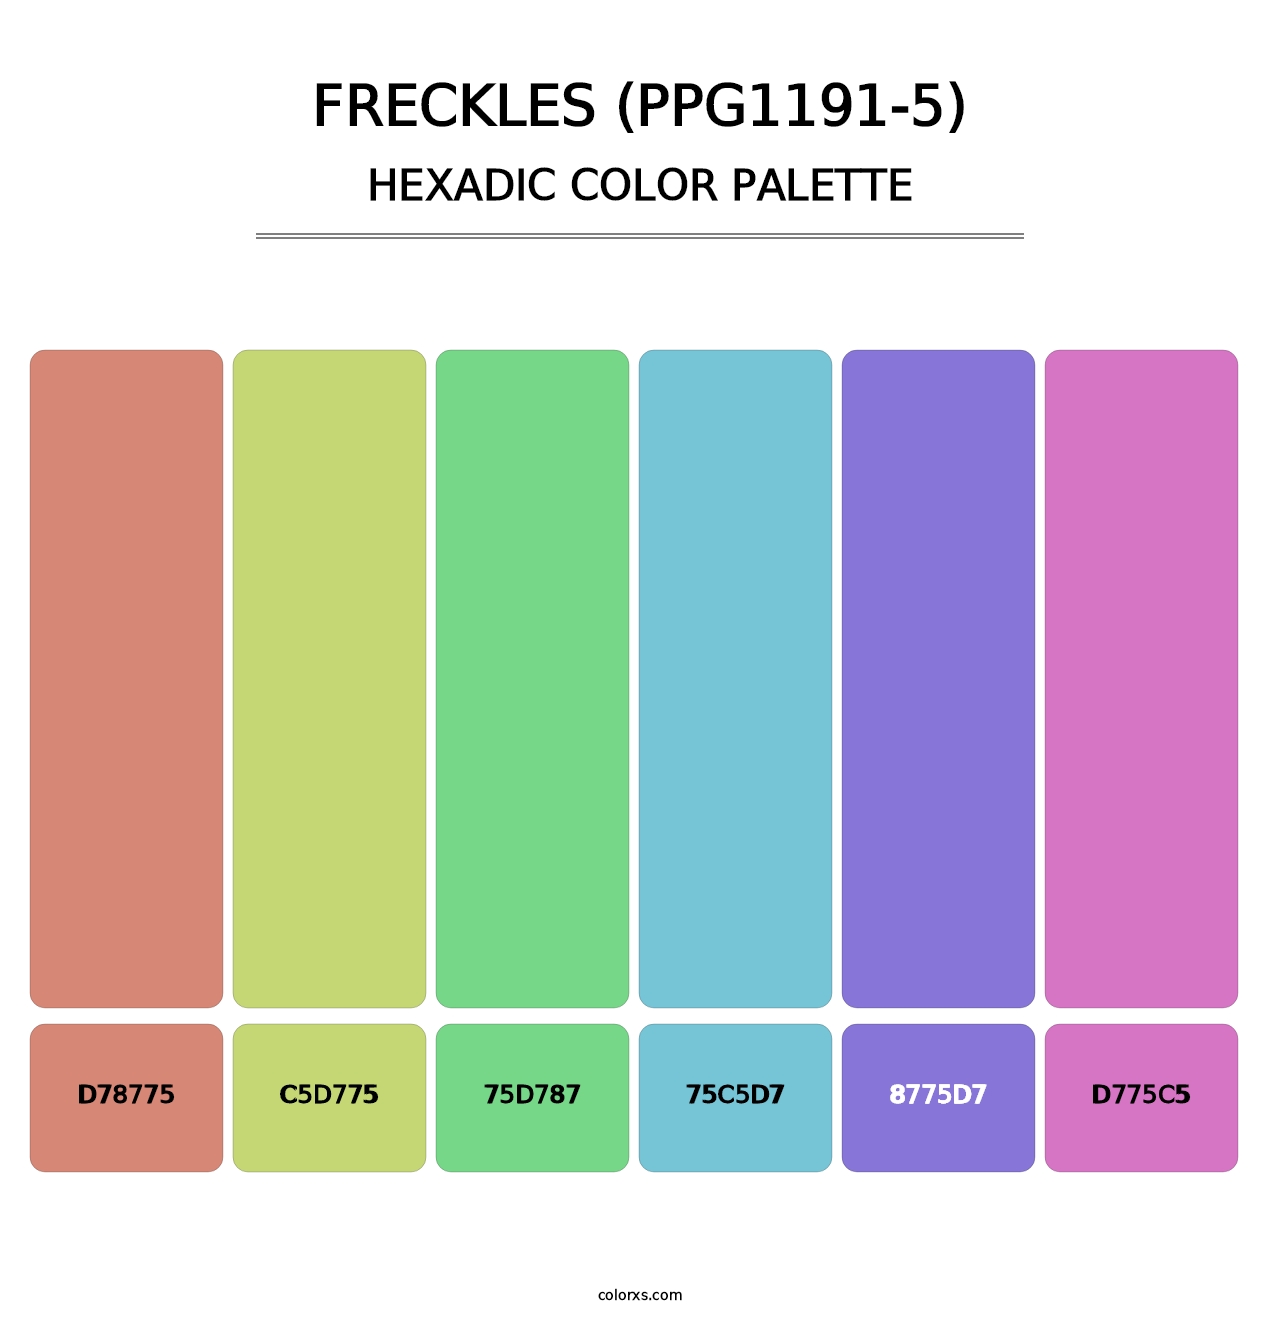 Freckles (PPG1191-5) - Hexadic Color Palette